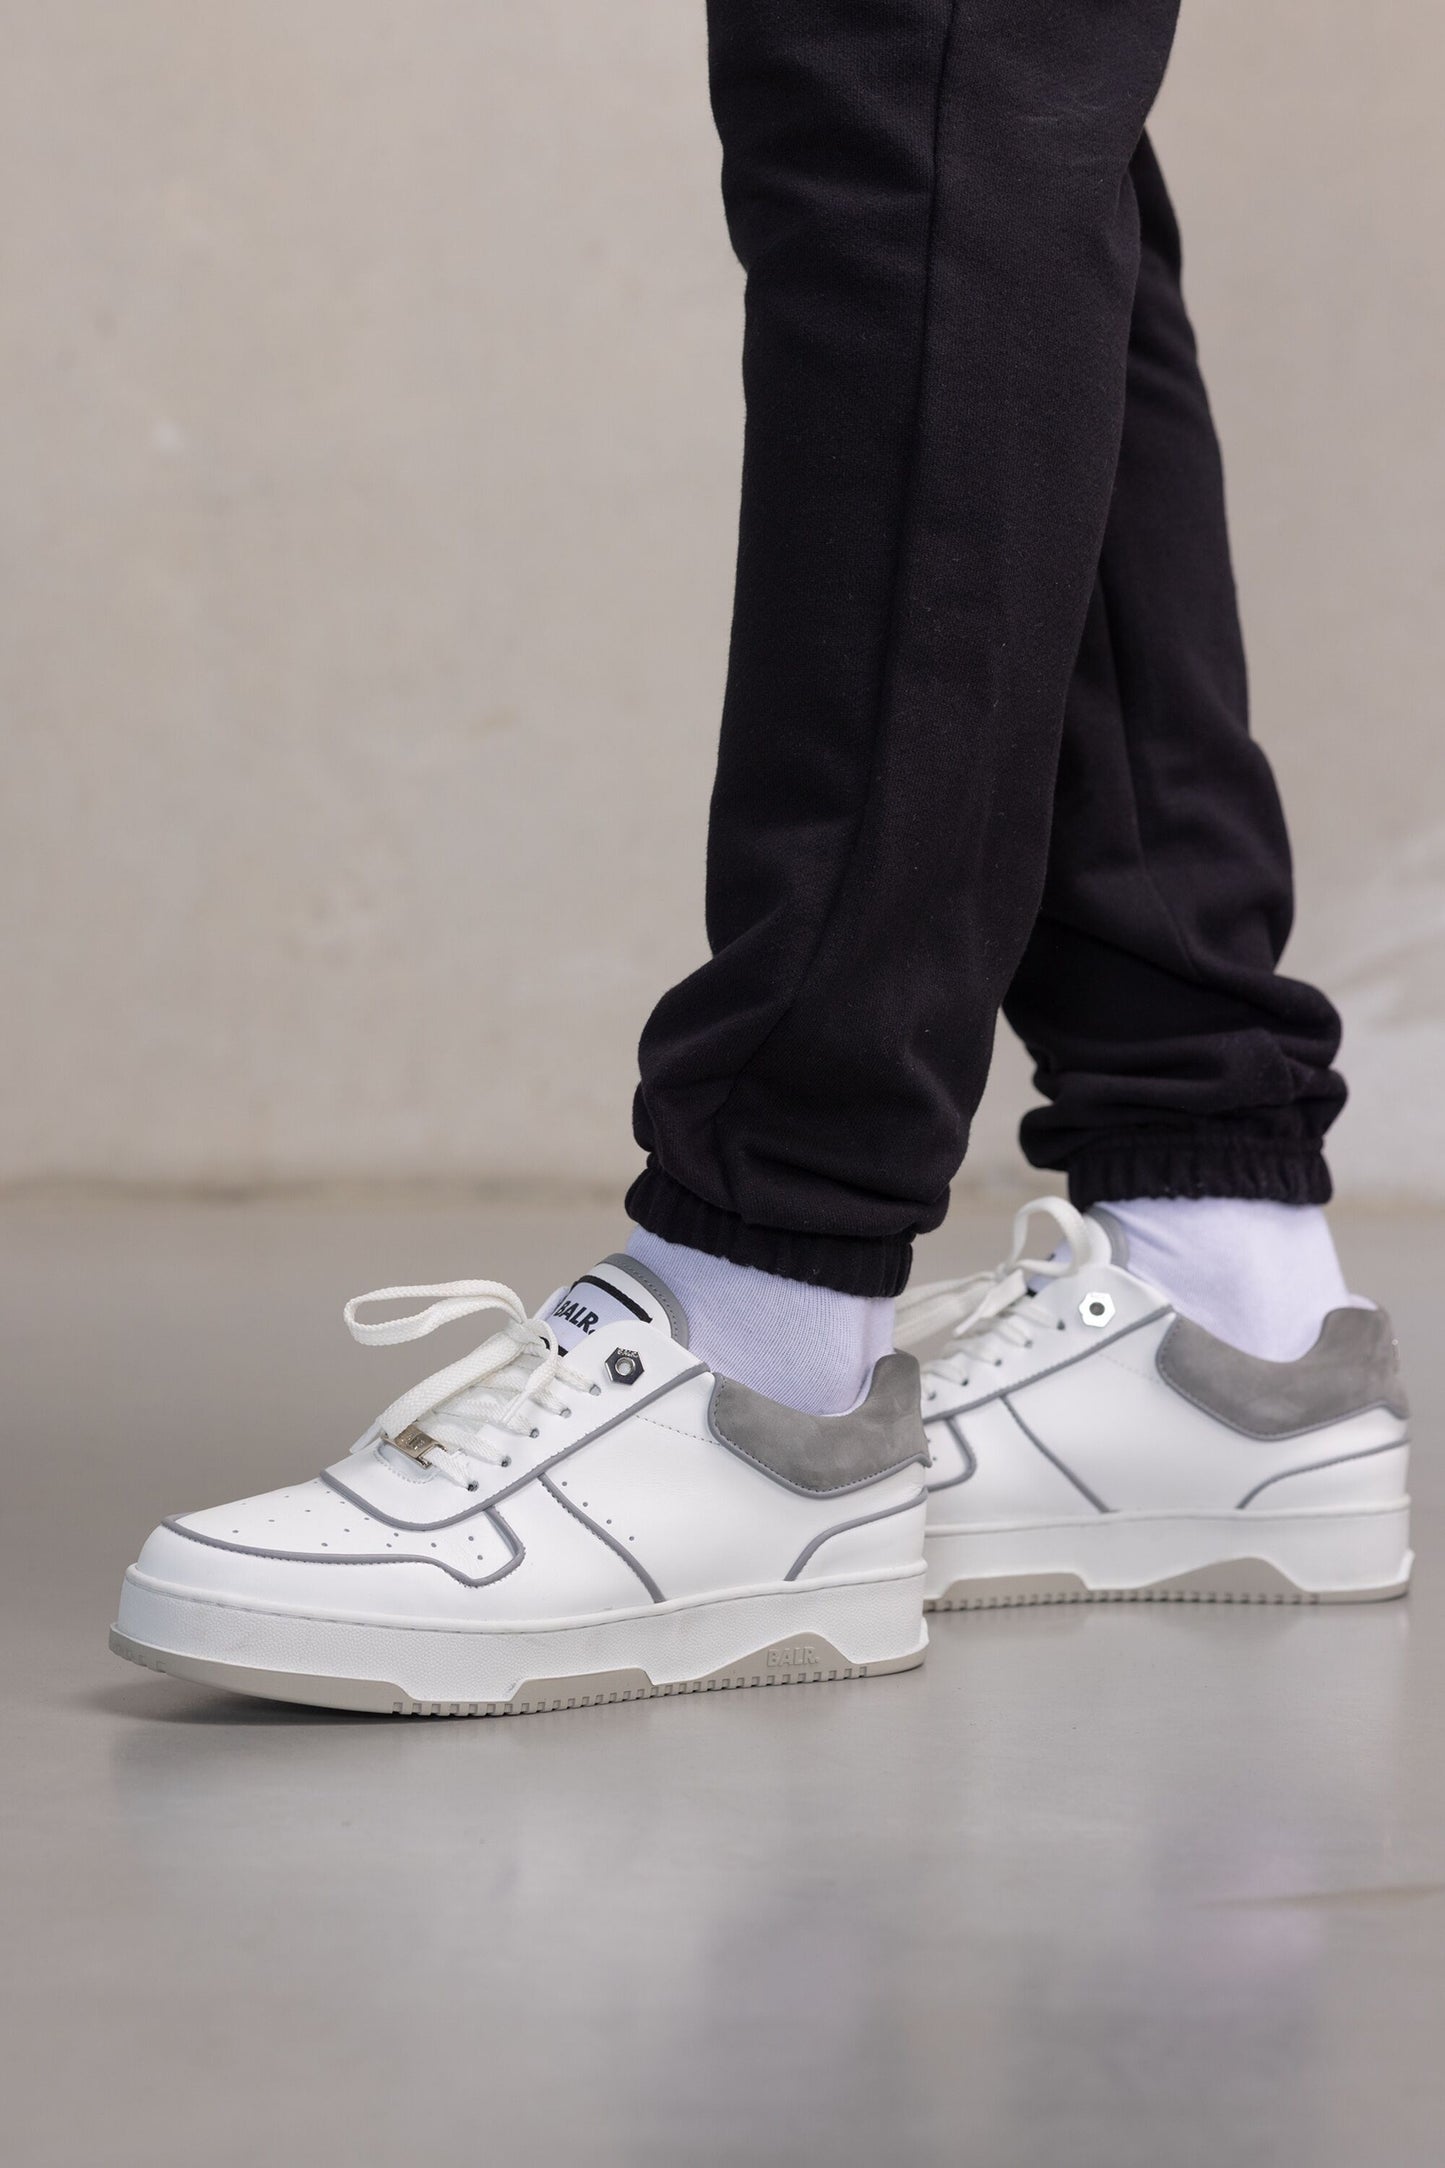 Club B Classic Sneaker Contrast White/Grey